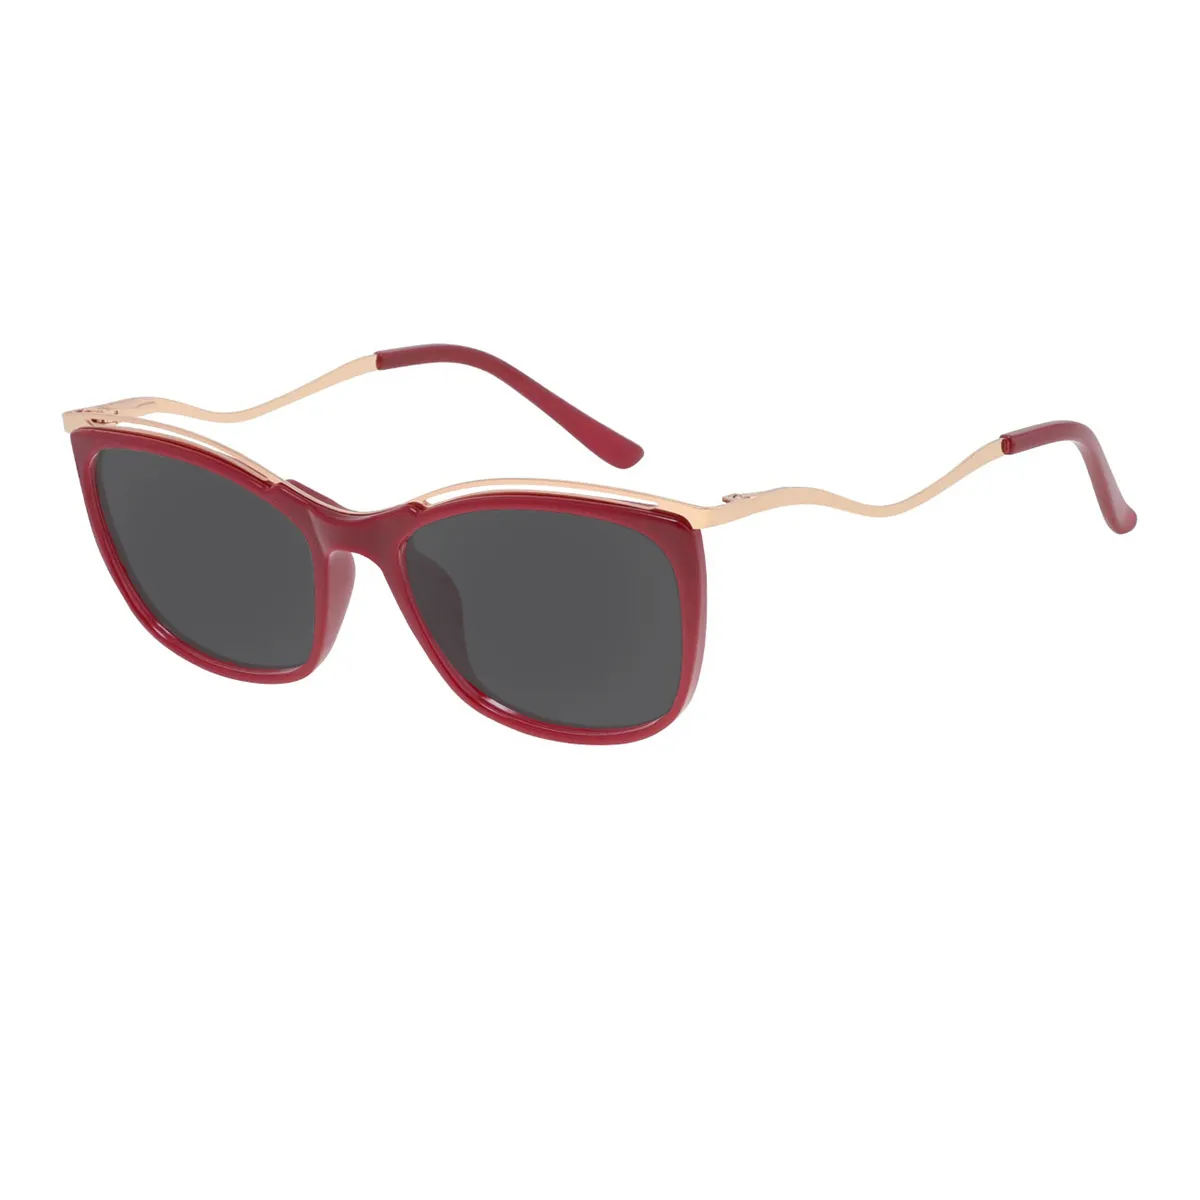 Ainslie - Rectangle Wine Sunglasses for Women